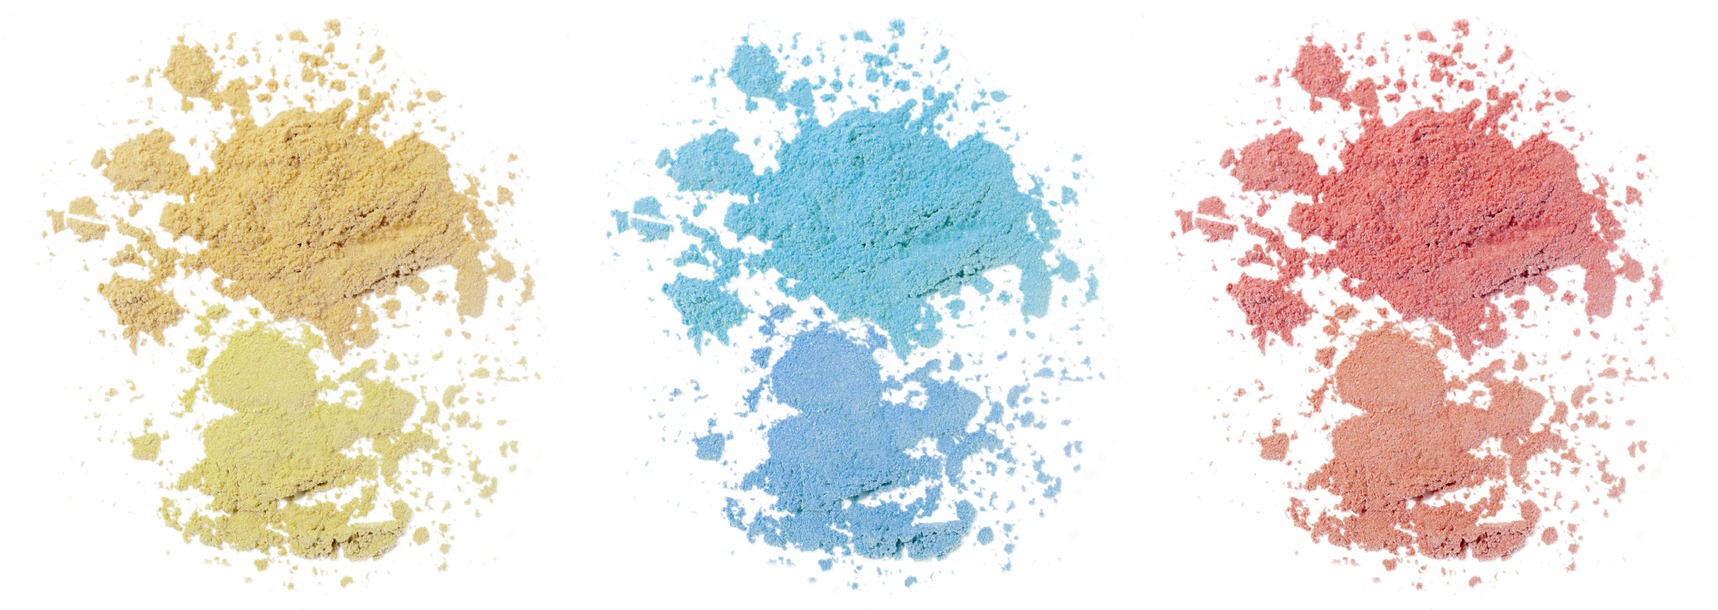 Different colors powder